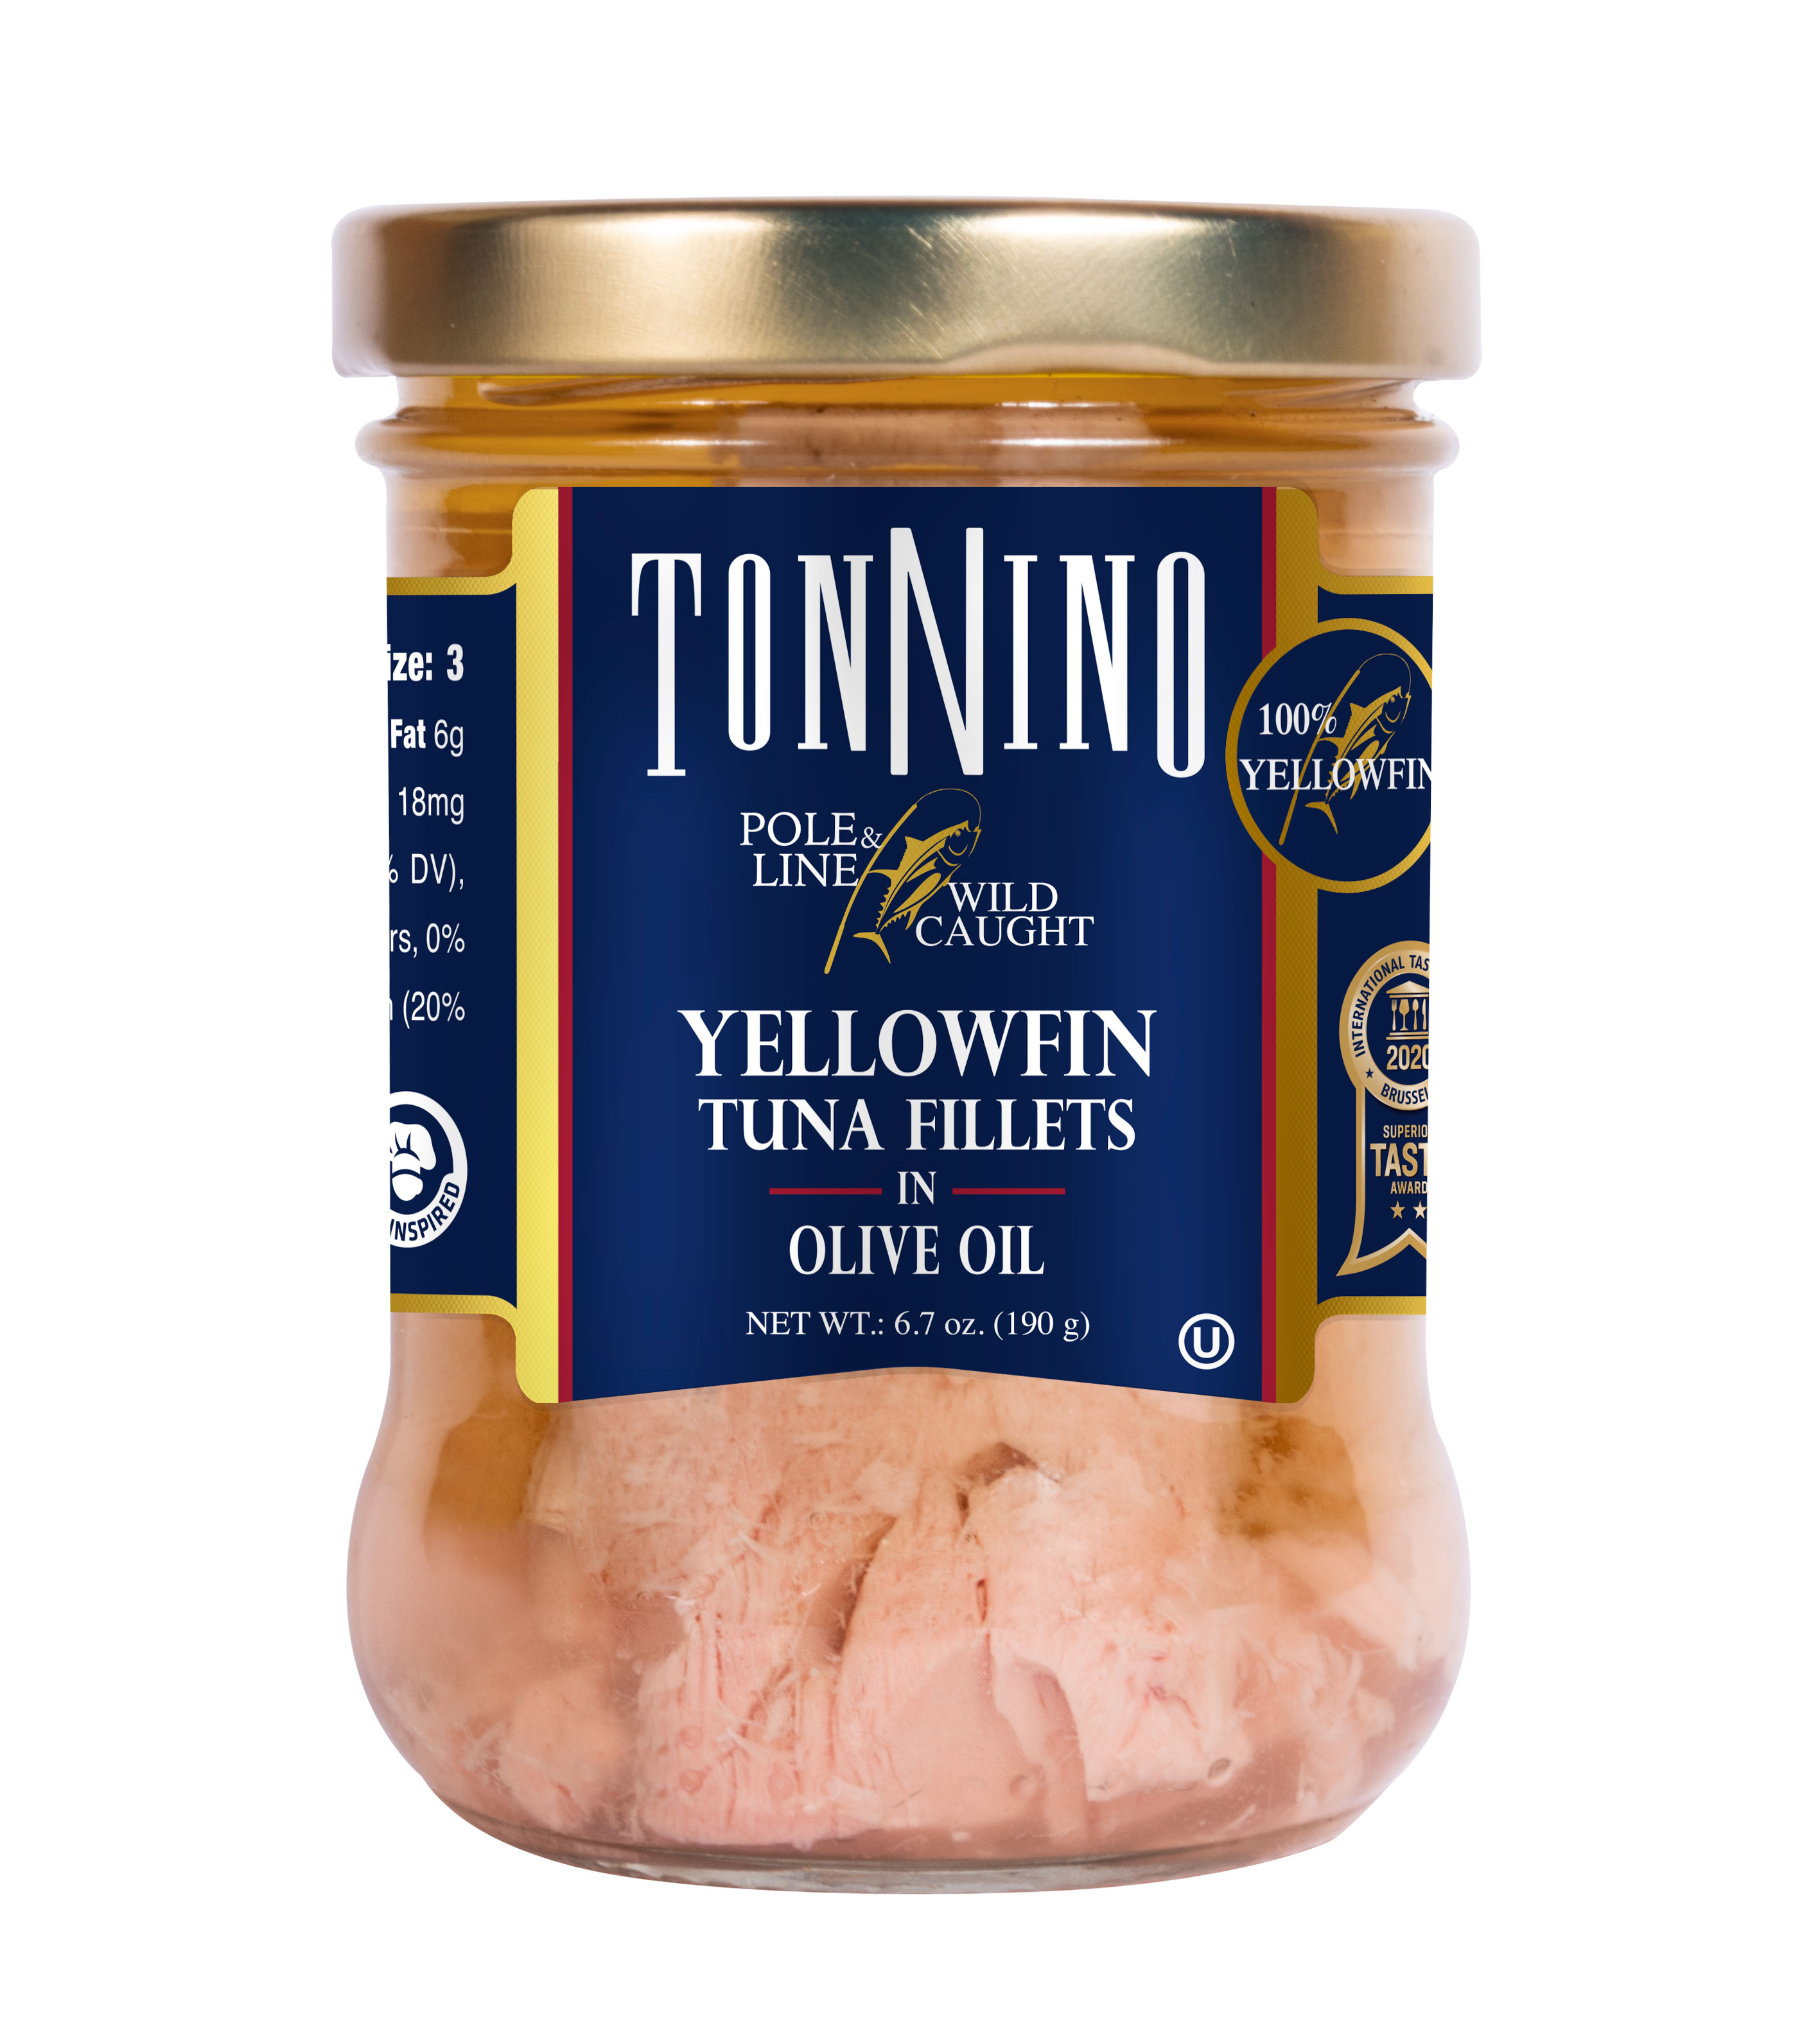 Tonnino Pole & Line Yellowfin Tuna Fillets In Olive Oil